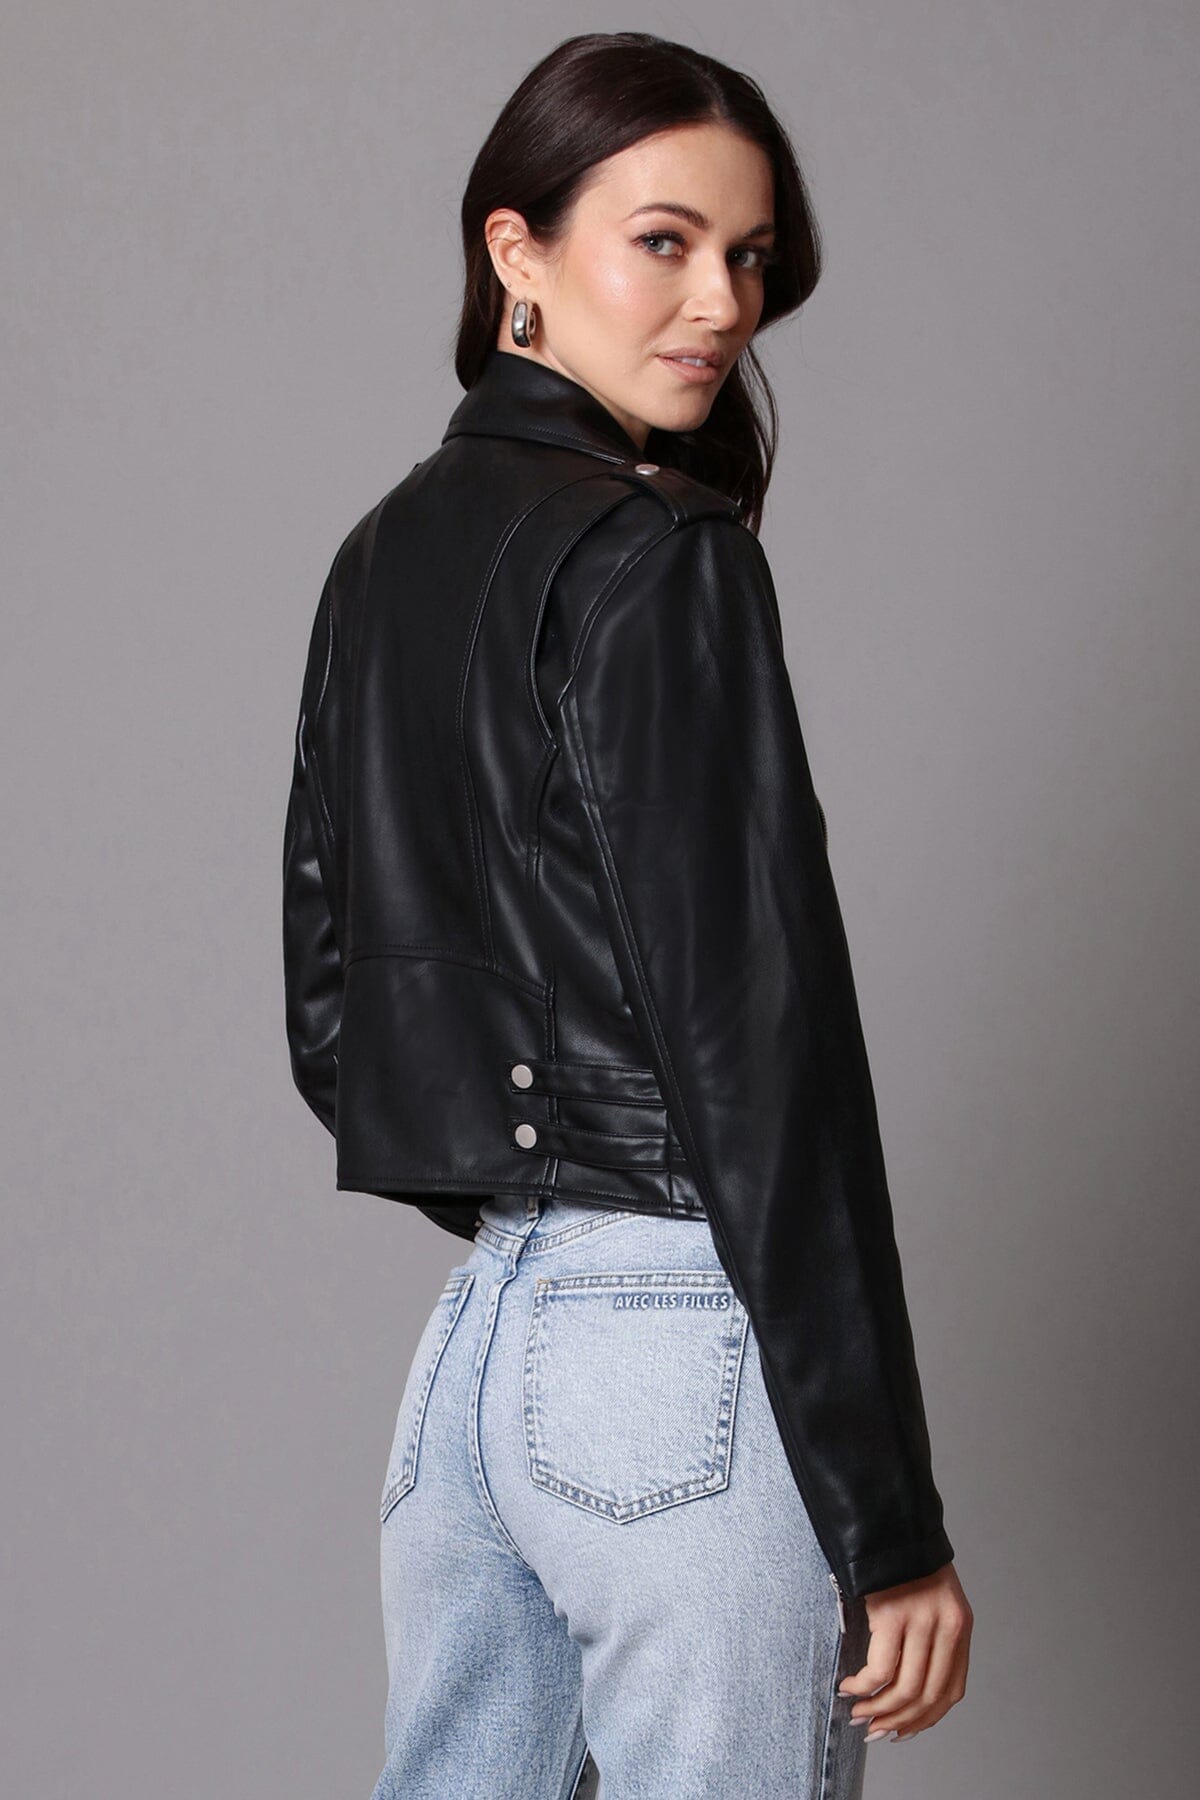 faux ever leather classic biker jacket black - women's figure flattering designer fashion day to night jackets 